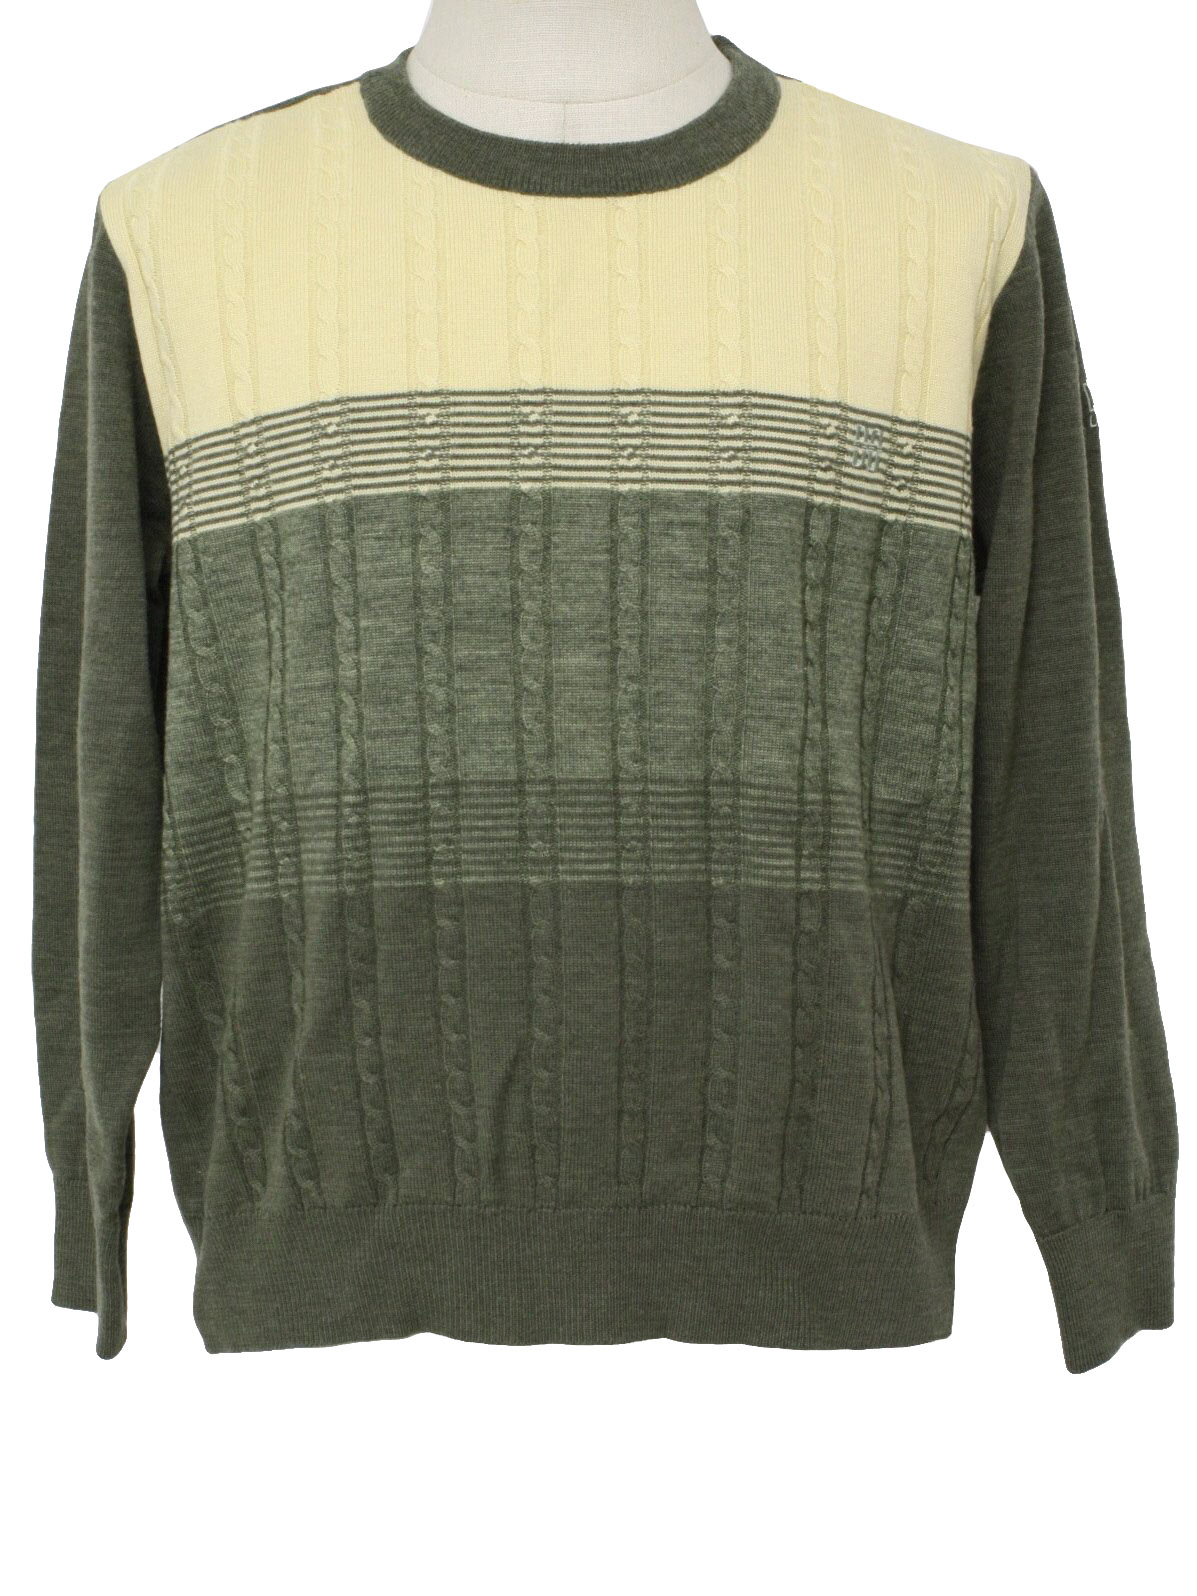 Retro 80's Sweater: 80s -Daks- Mens green and tan acrylic blend ...